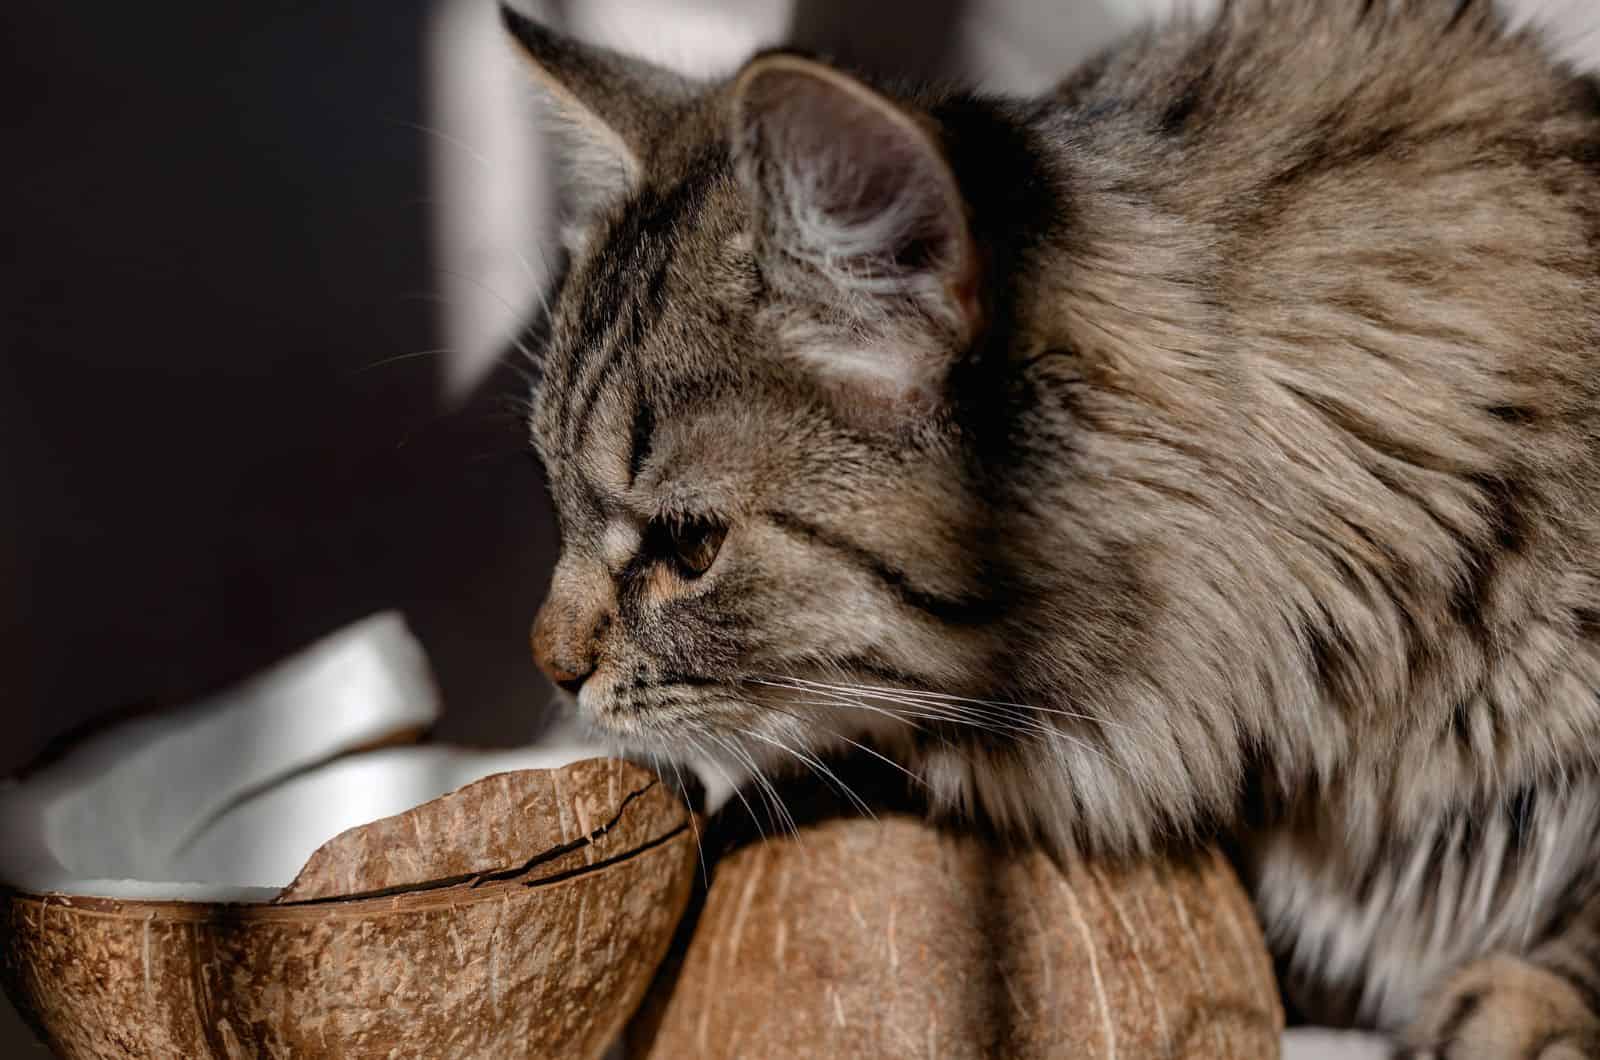 Cat sniffs half coconut